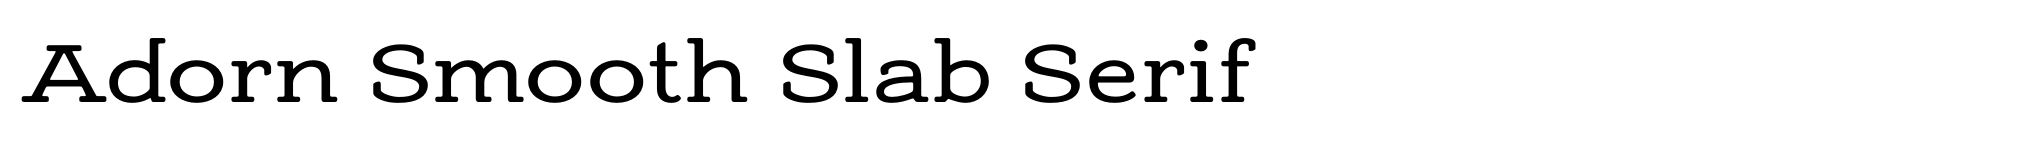 Adorn Smooth Slab Serif image